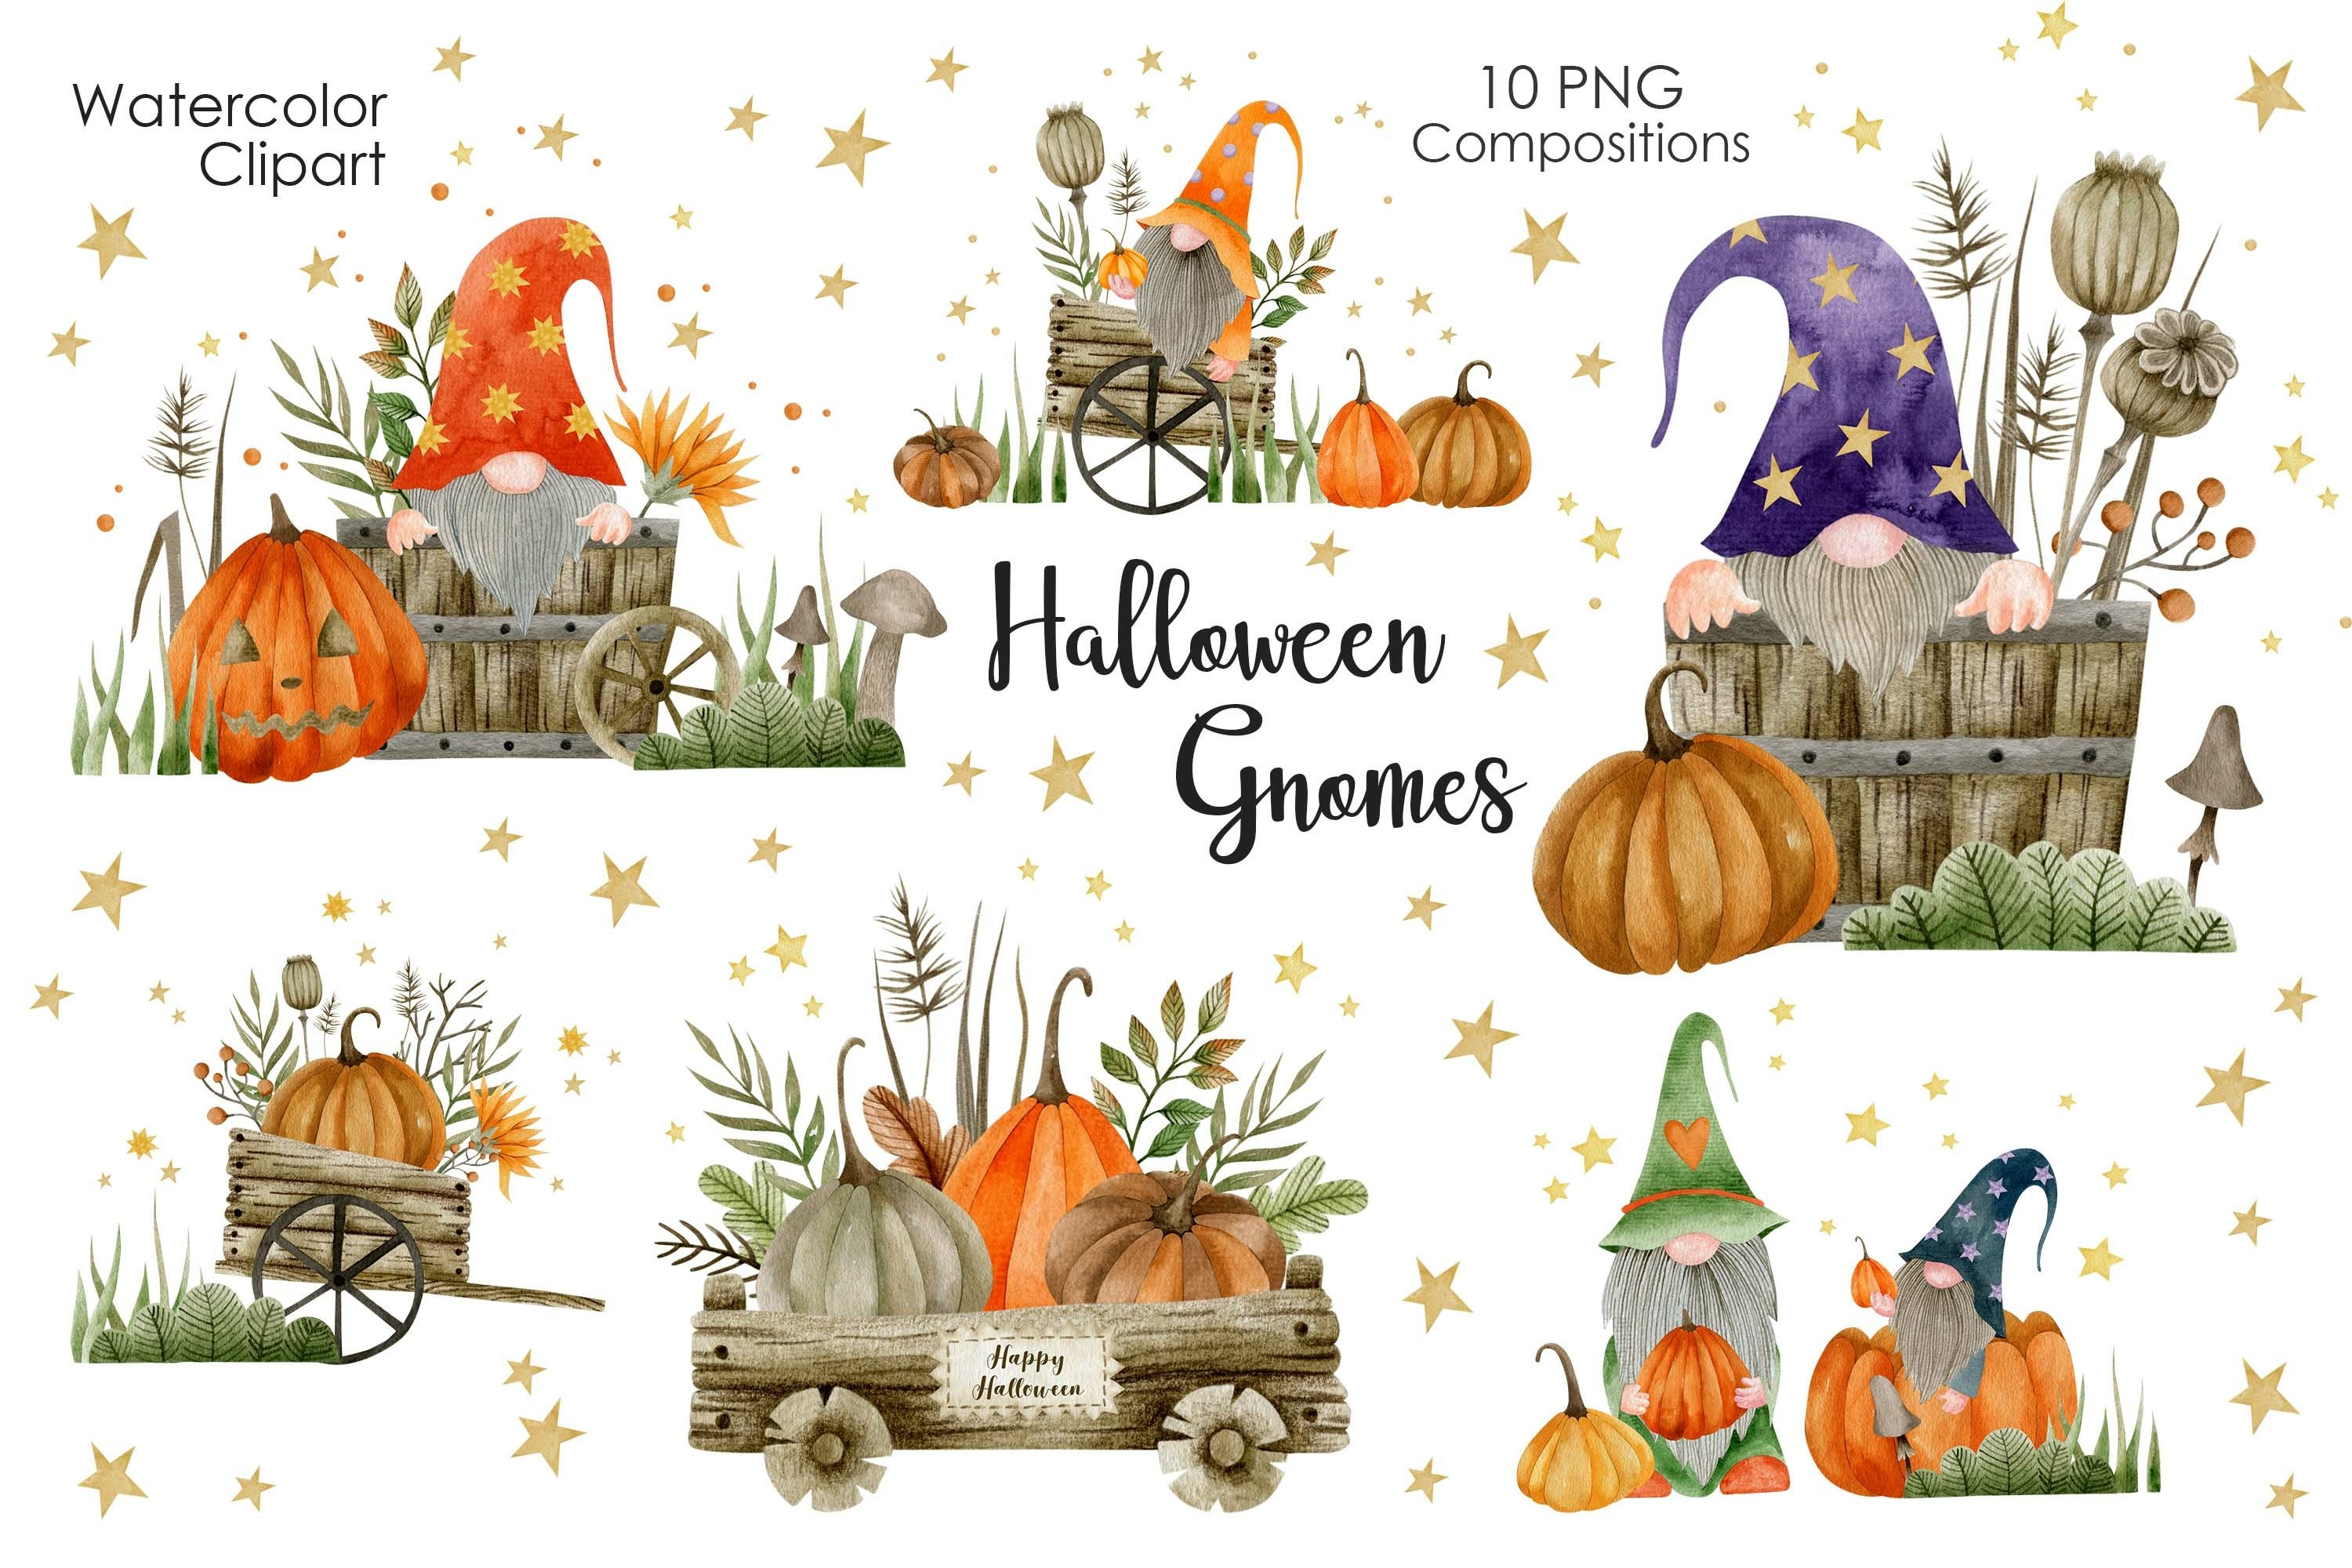 Watercolor Halloween Gnomes unique illustration